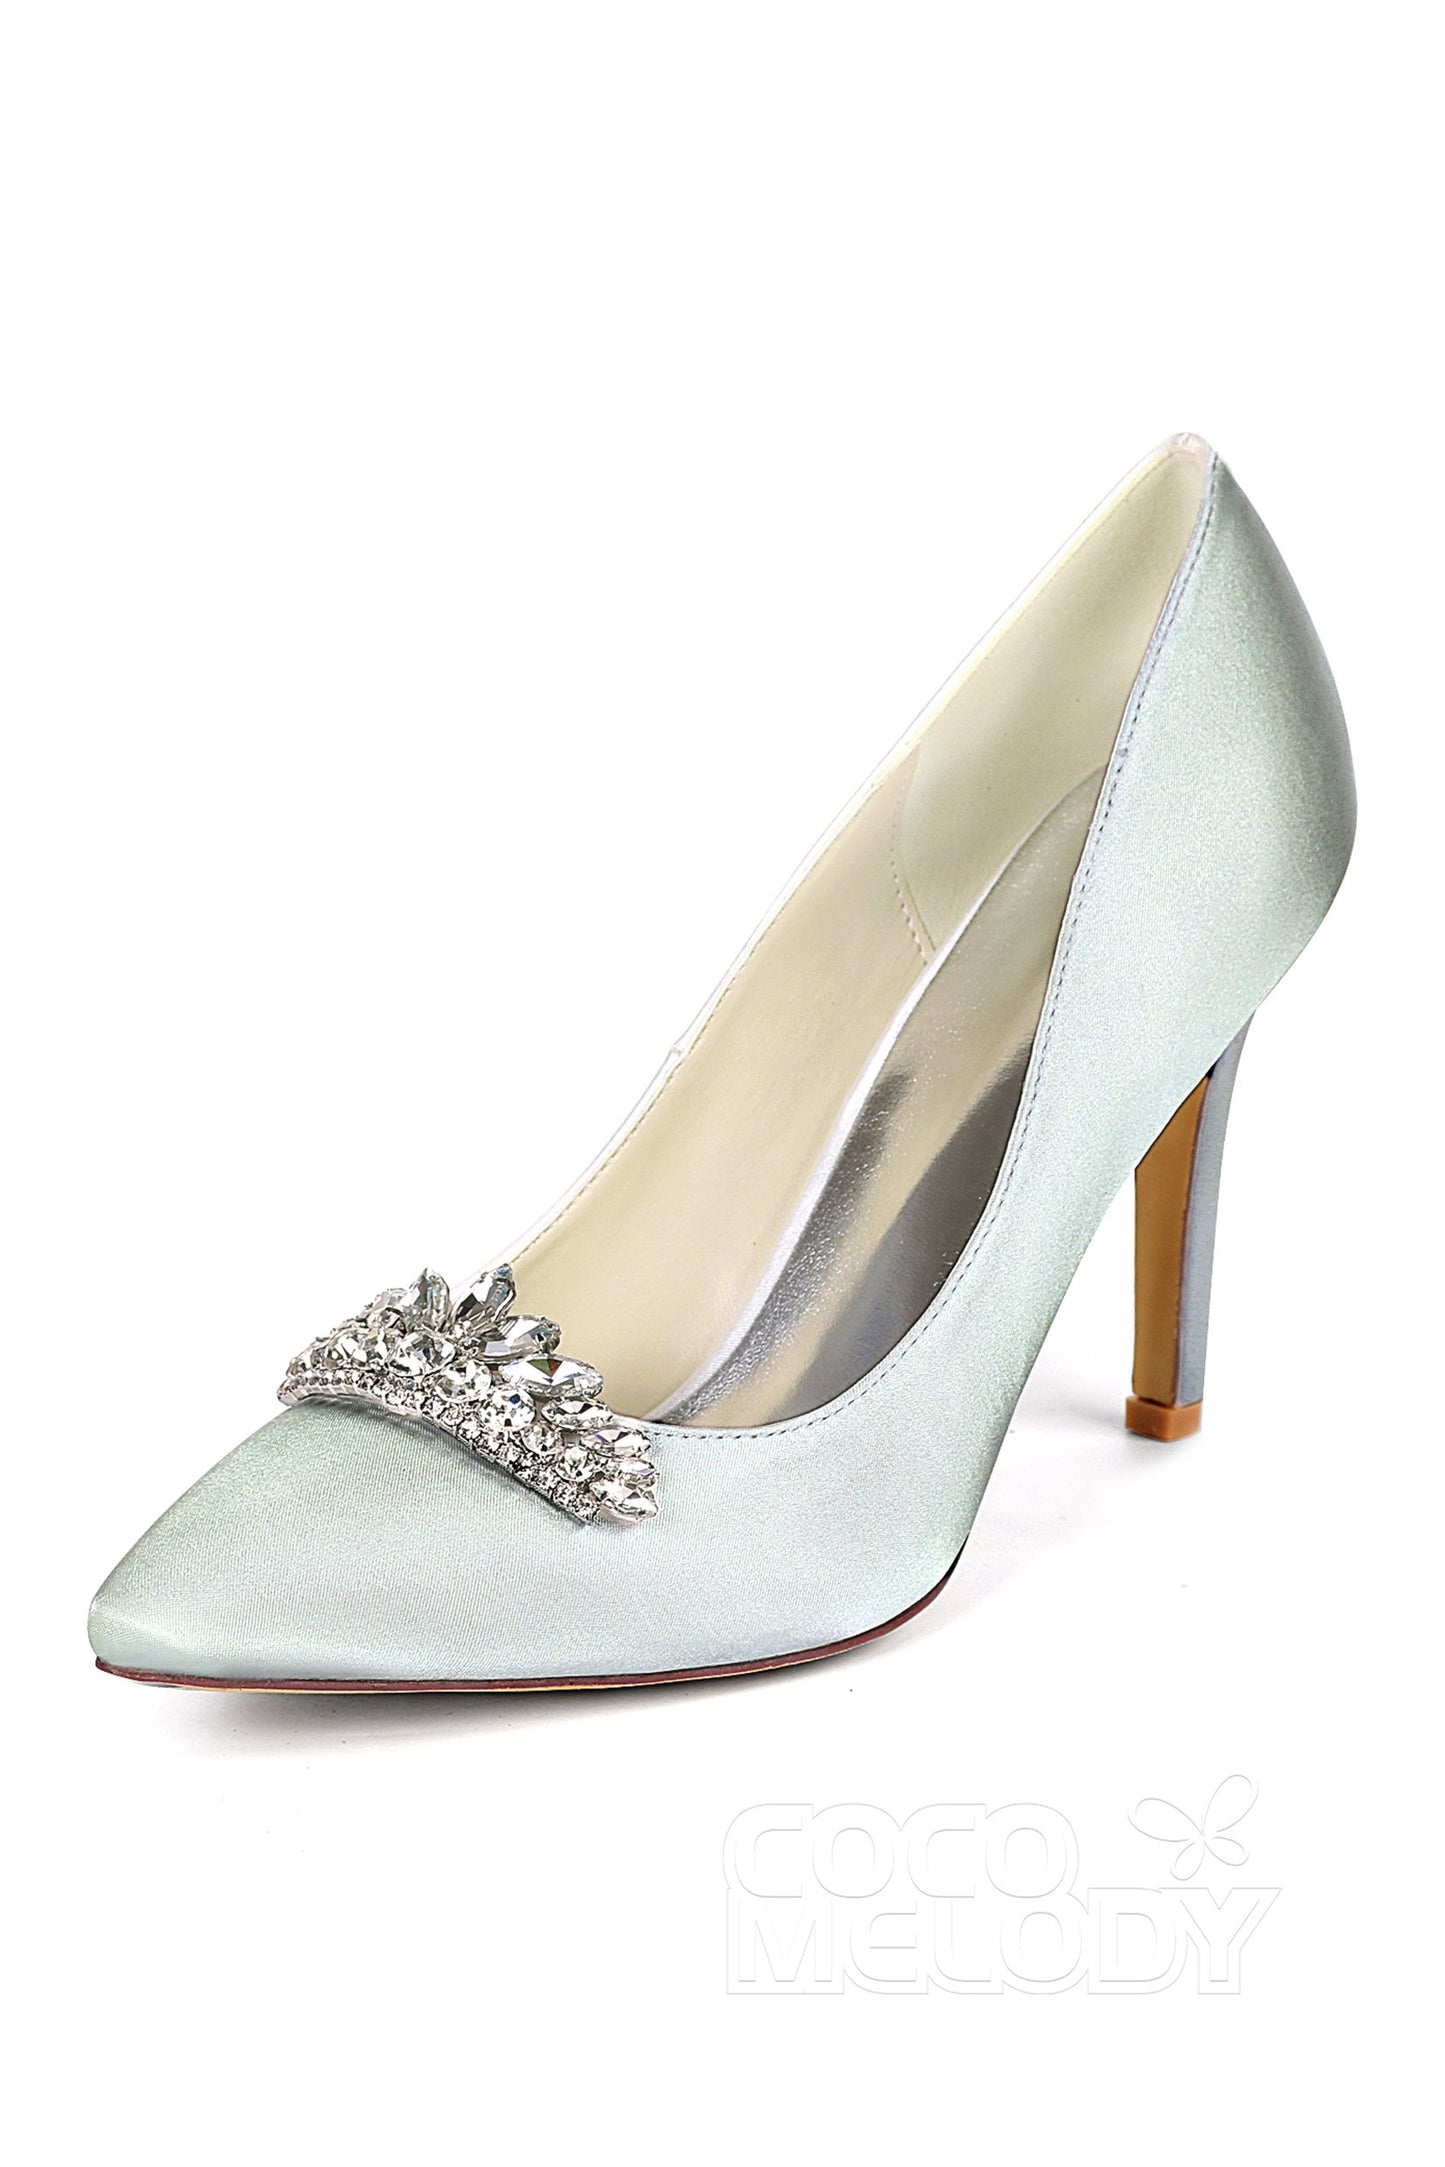 Stiletto Heel Silk-Like Heels Bridal Shoes CK0067